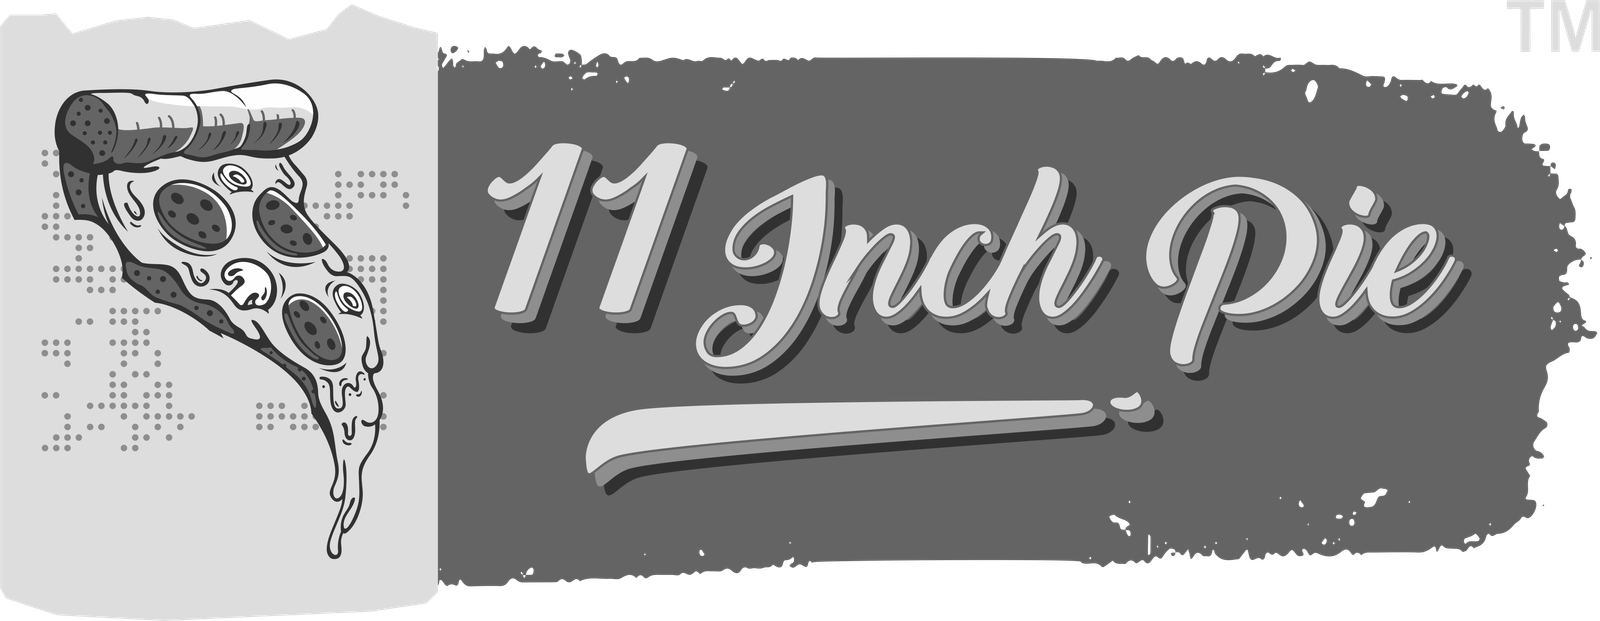 11 Inch Pie Pizza Cafe